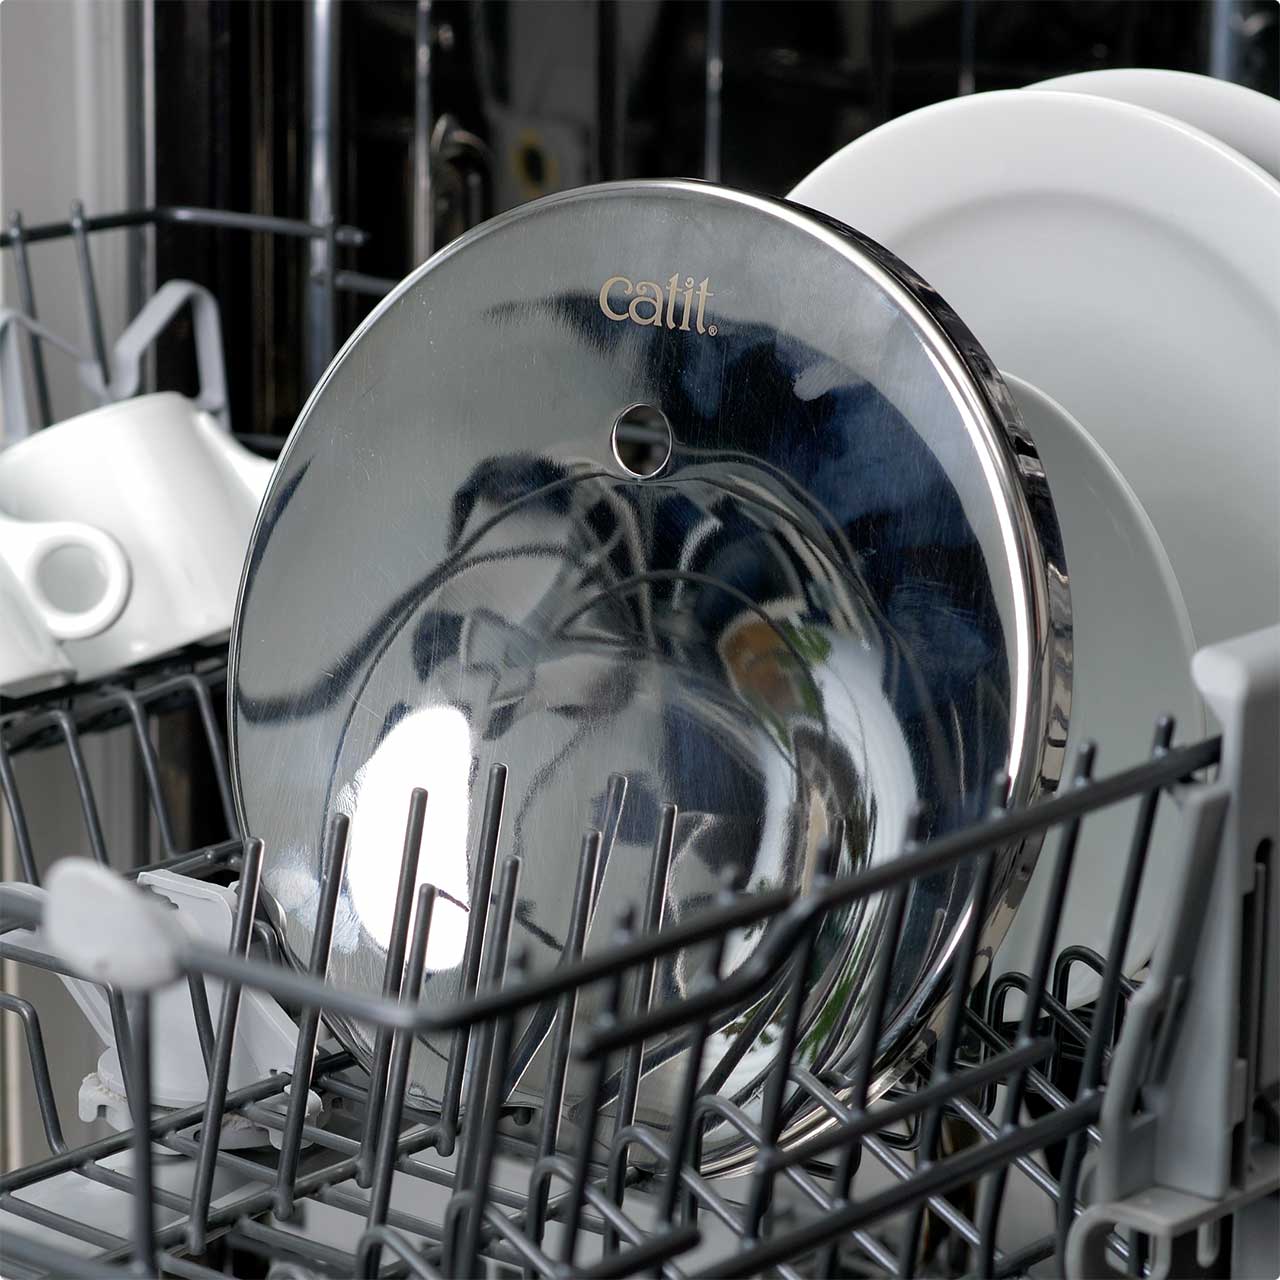 Dessus en acier inoxydable qui va au lave-vaisselle